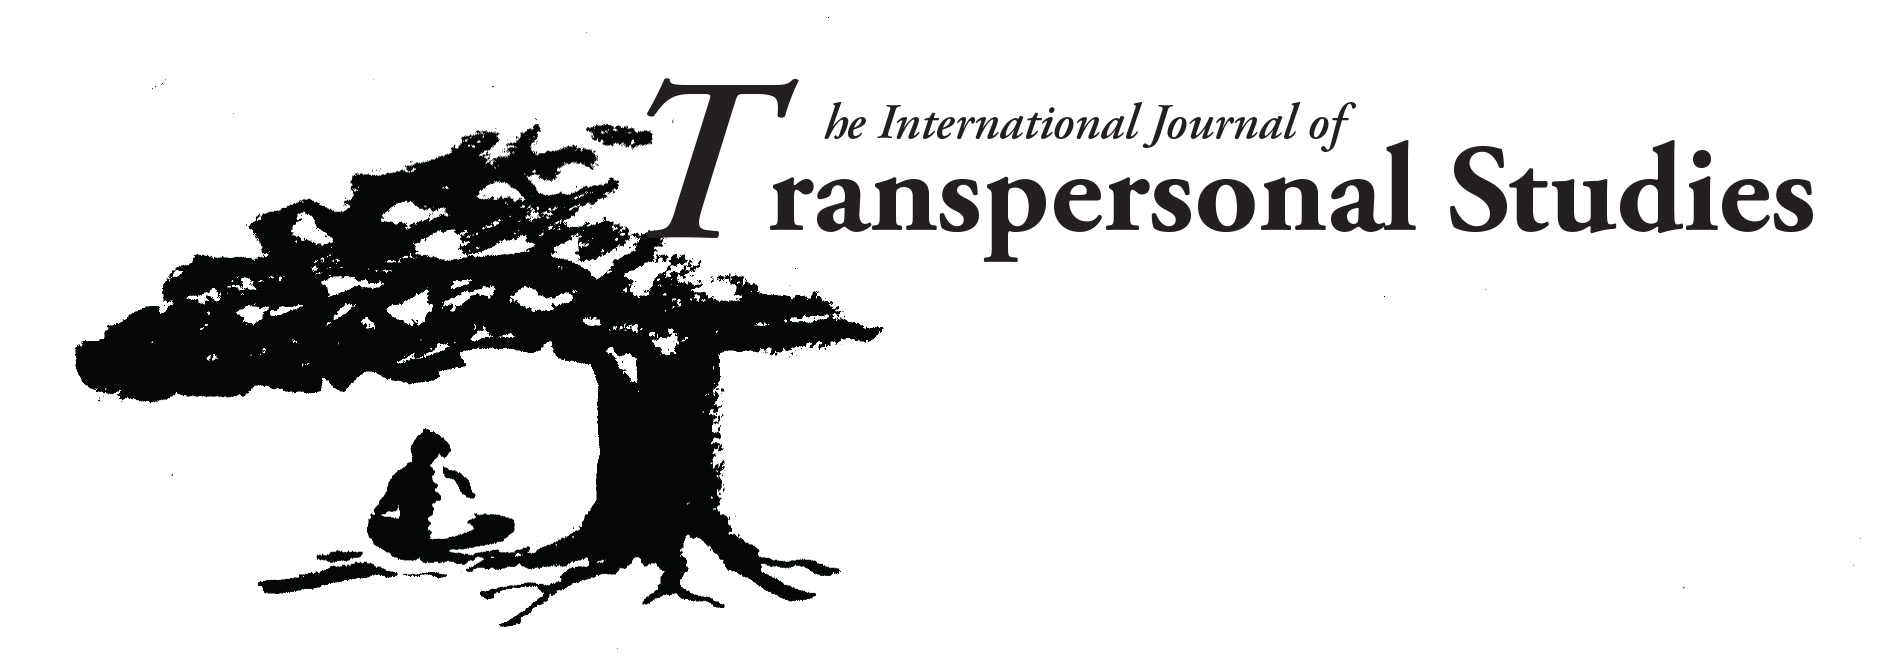 The International Journal of Transpersonal Studies